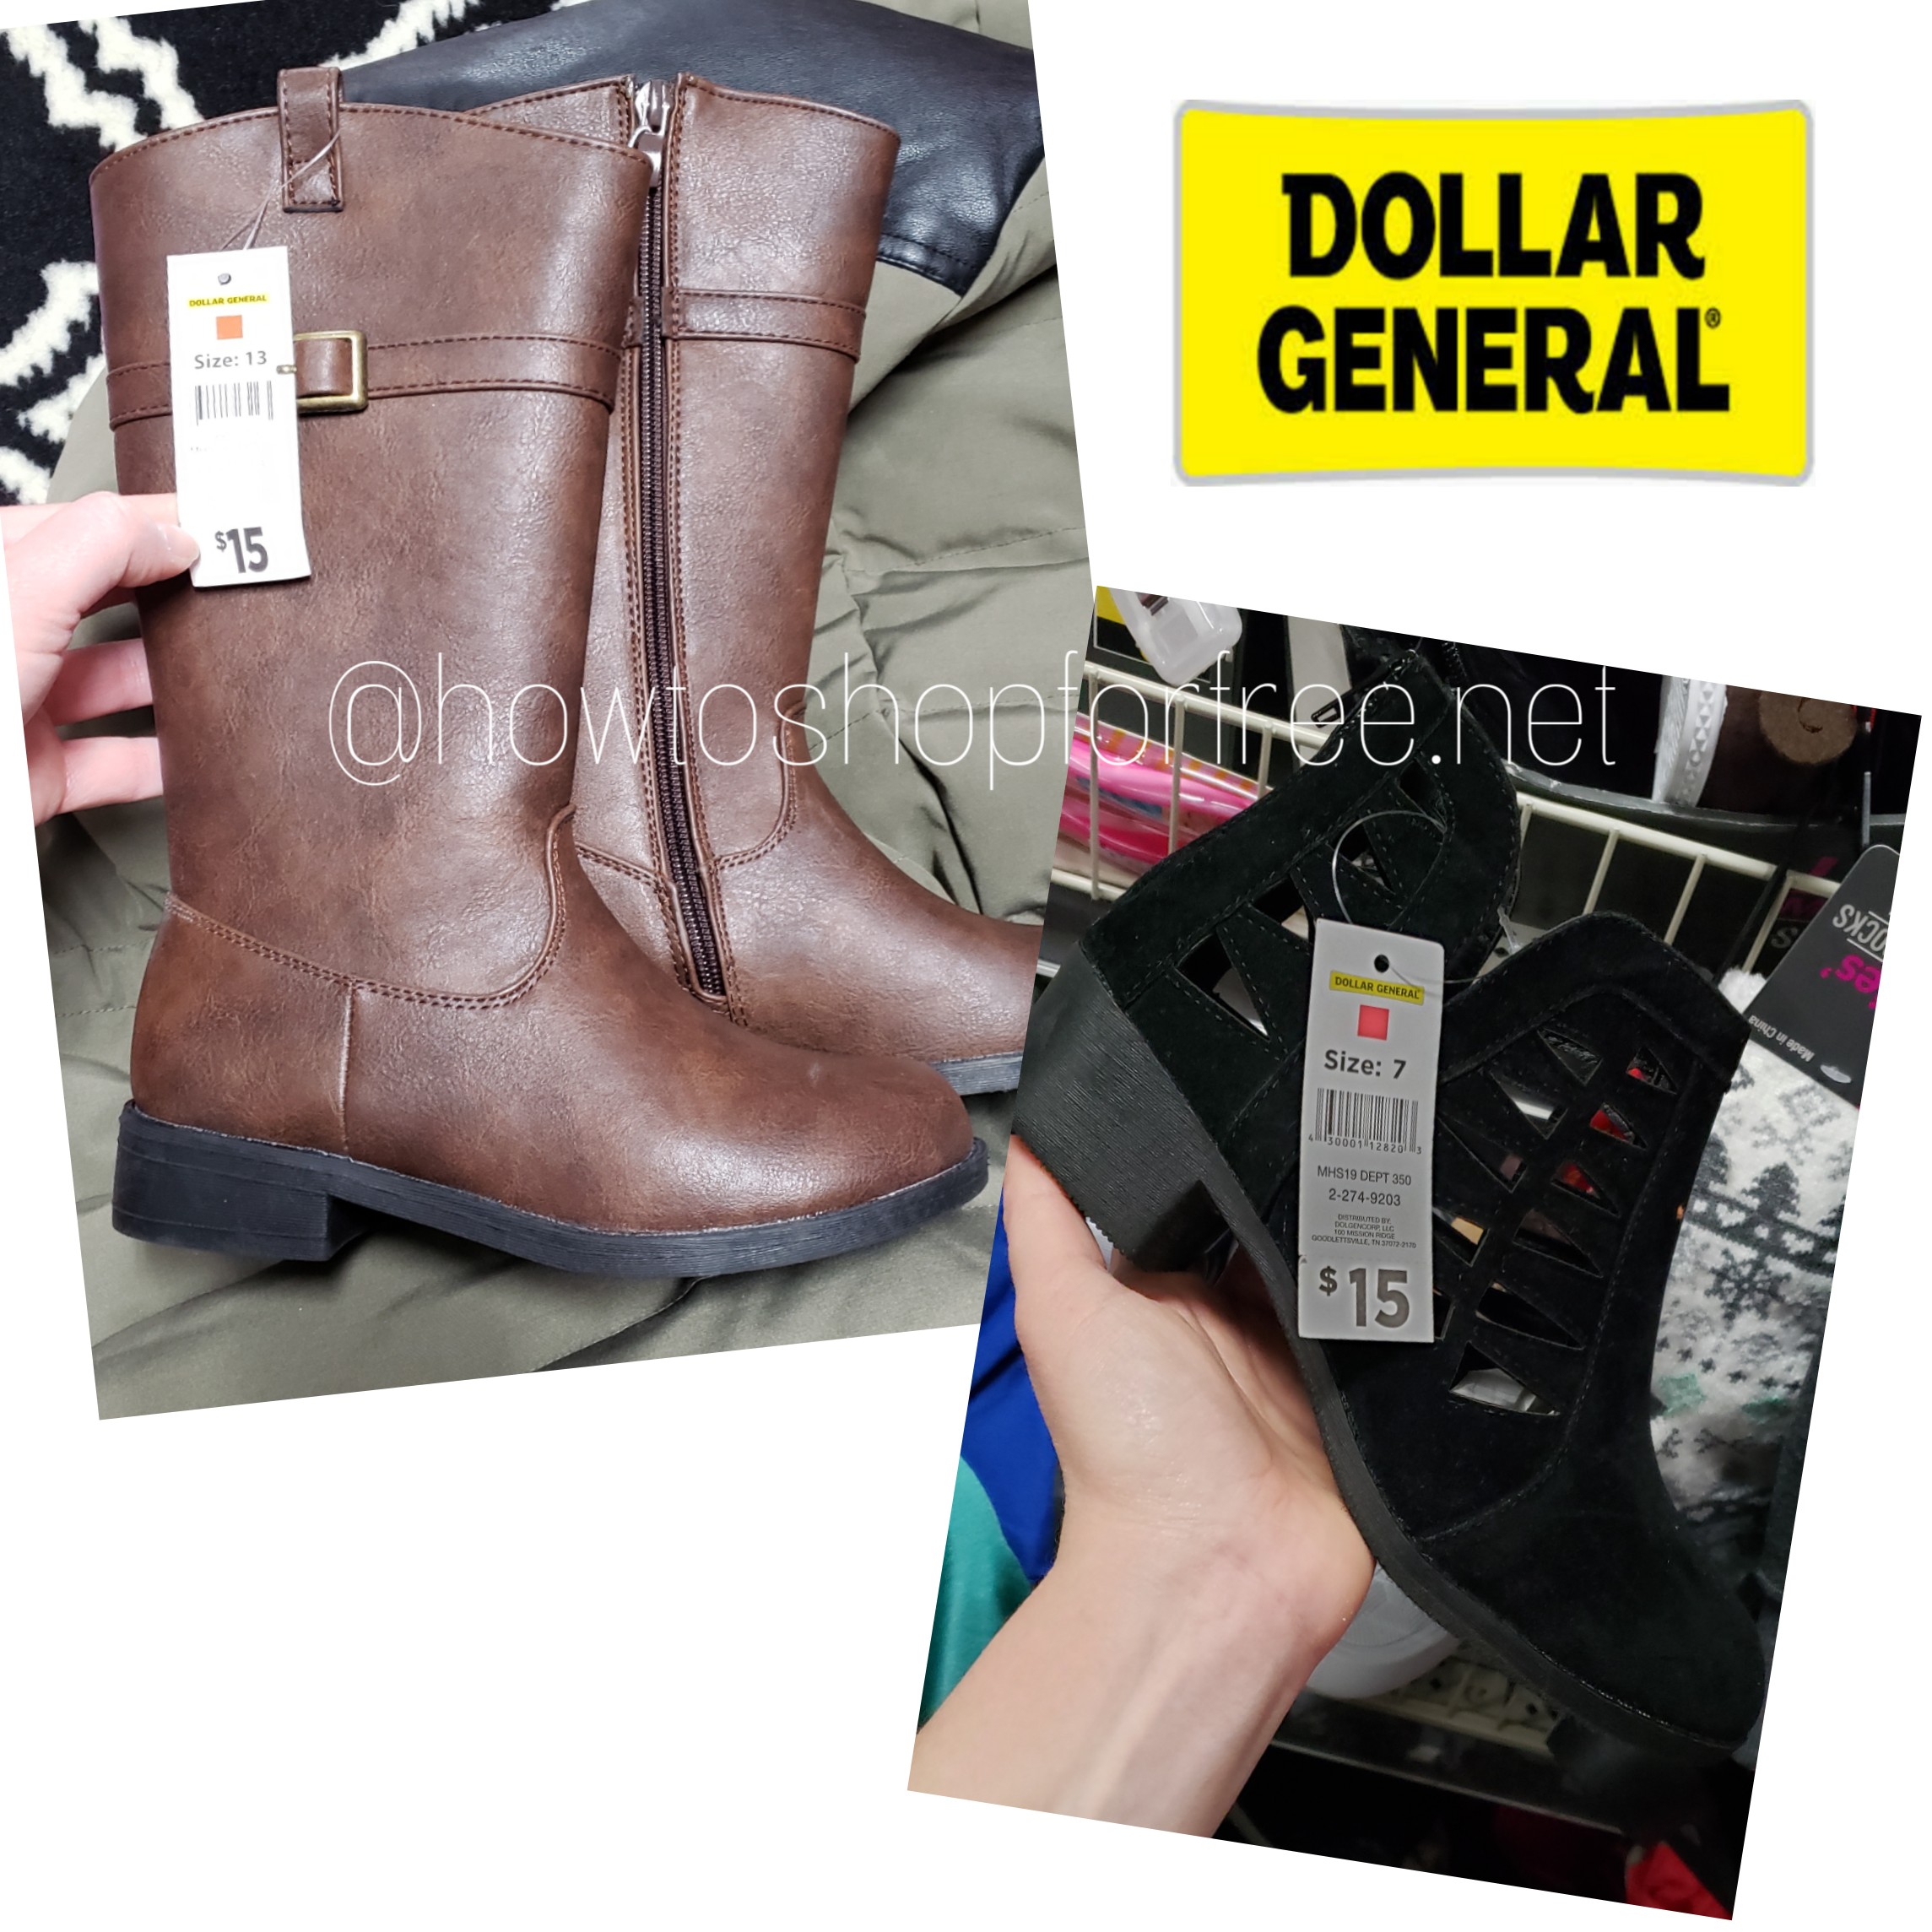 shoes at dollar general